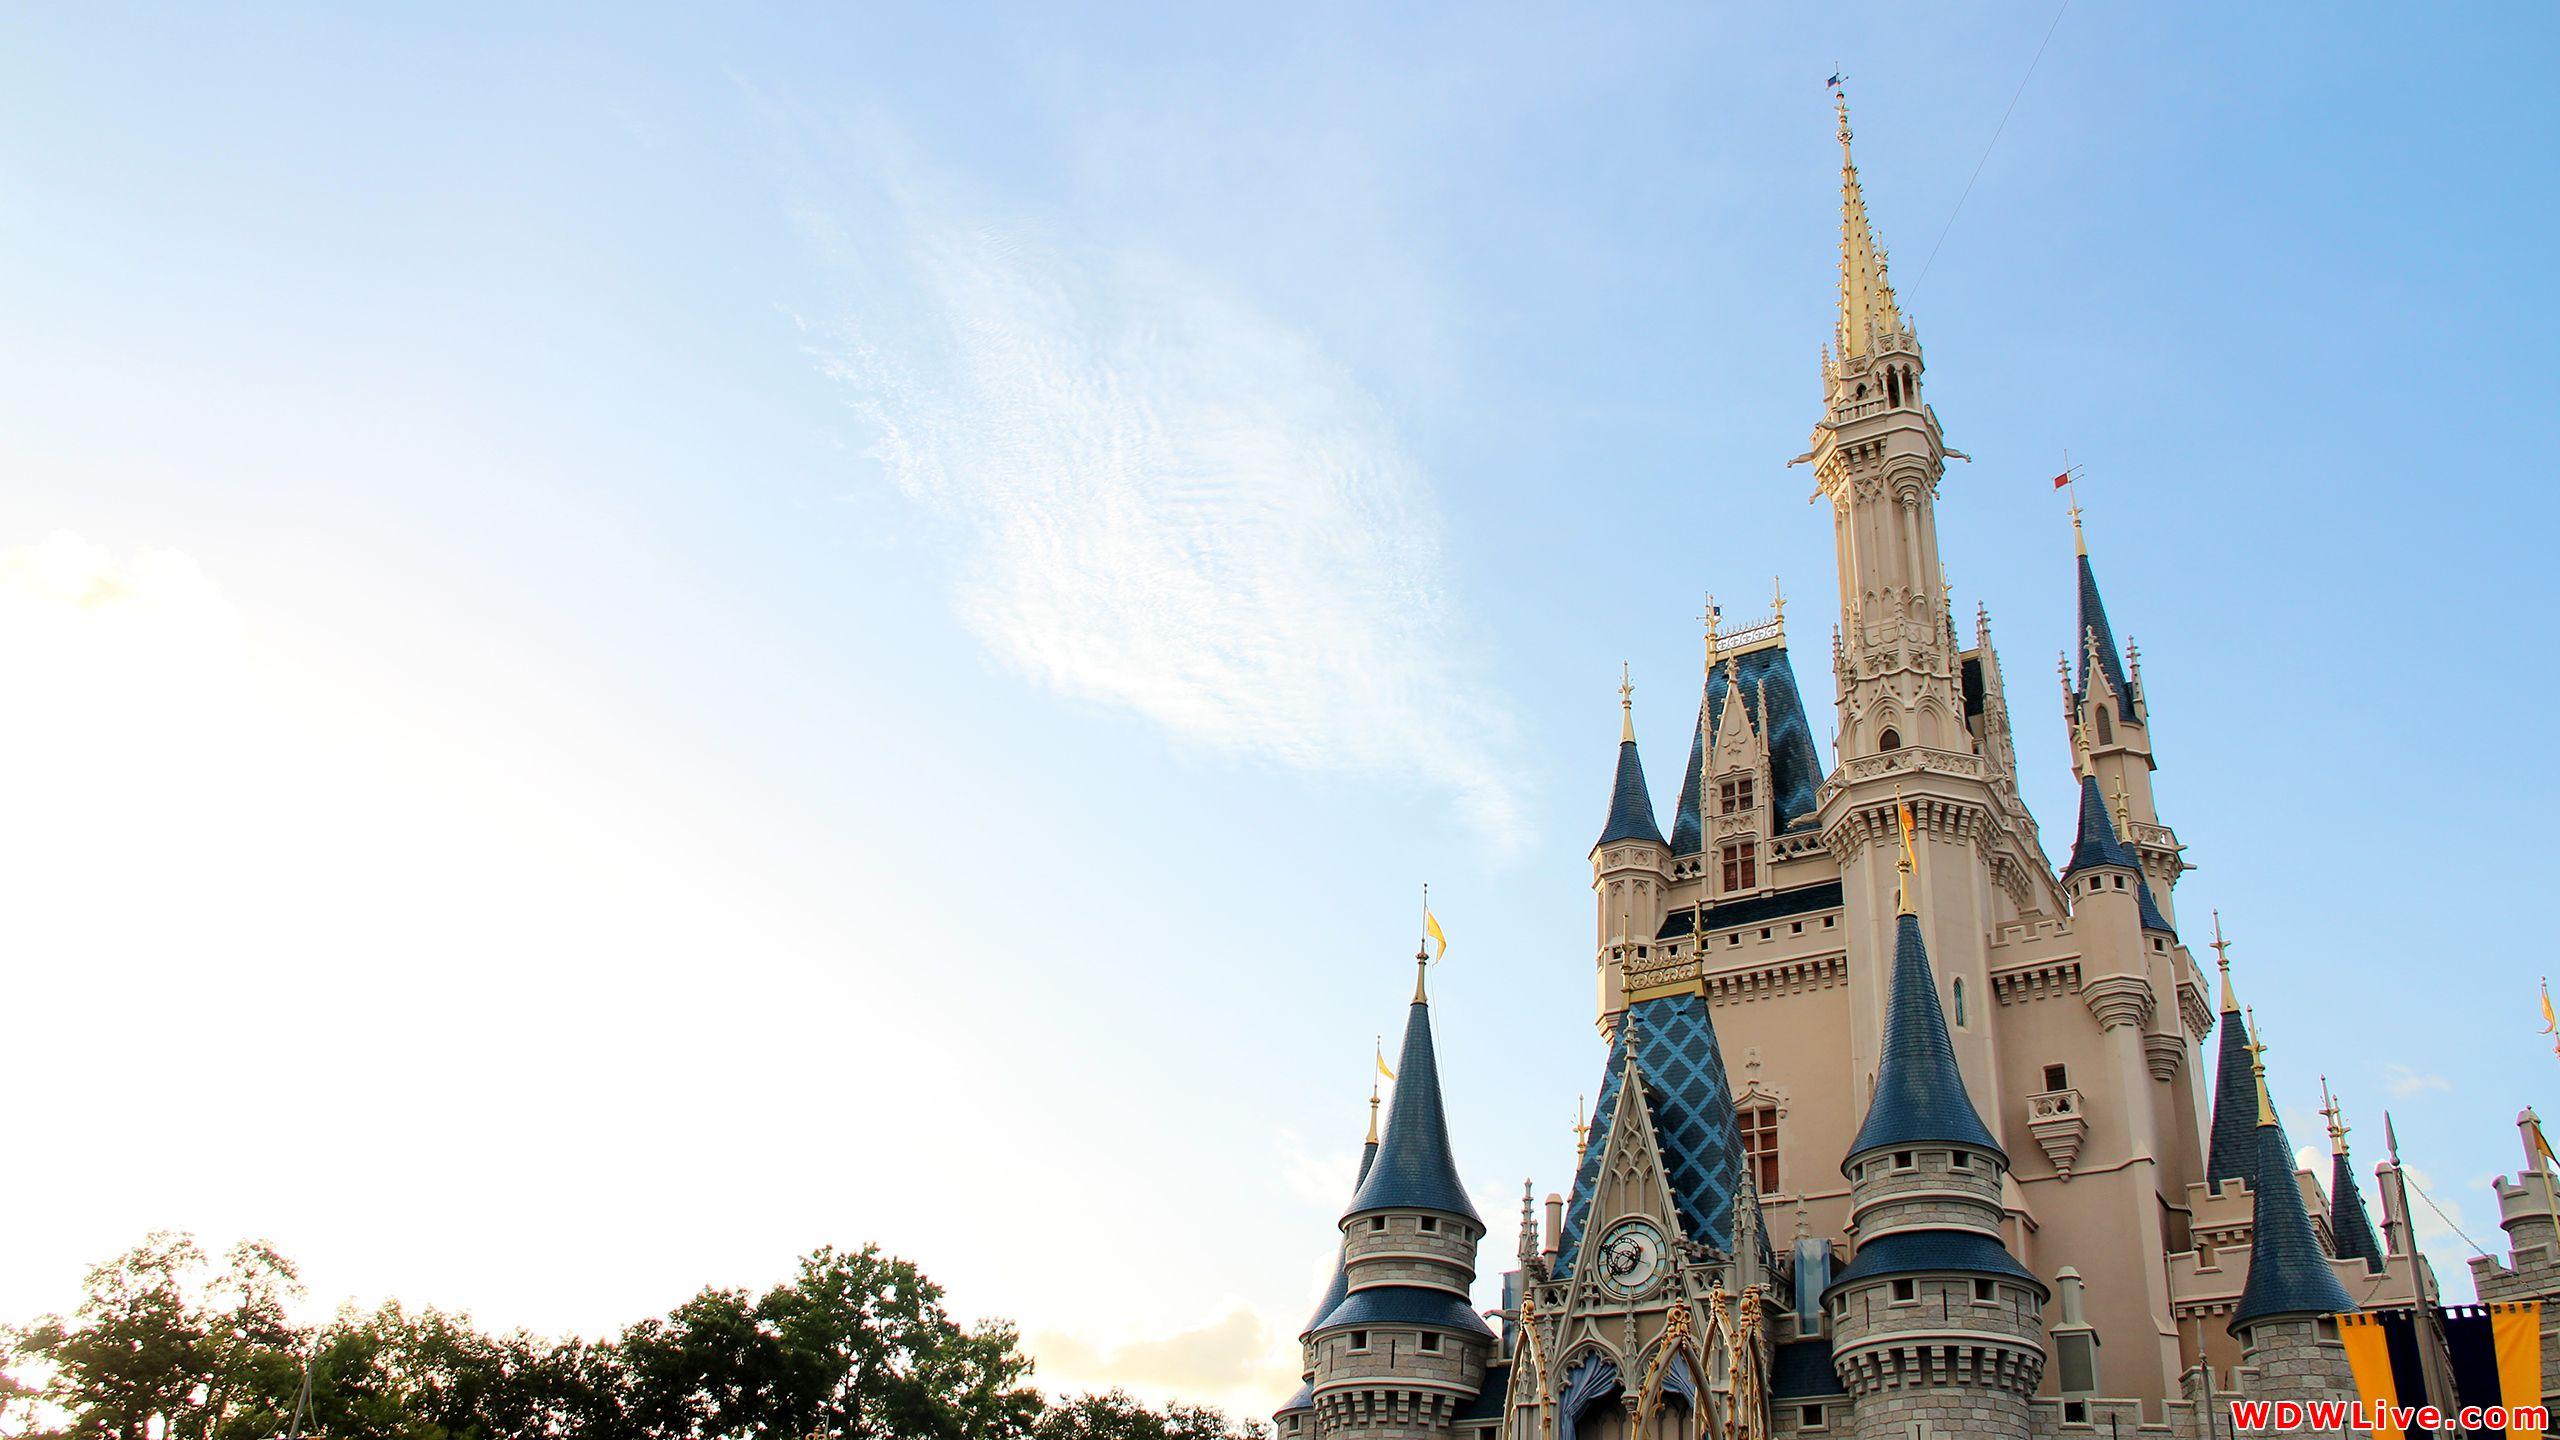 Cinderella Castle: End of afternoon desktop wallpaper photograph